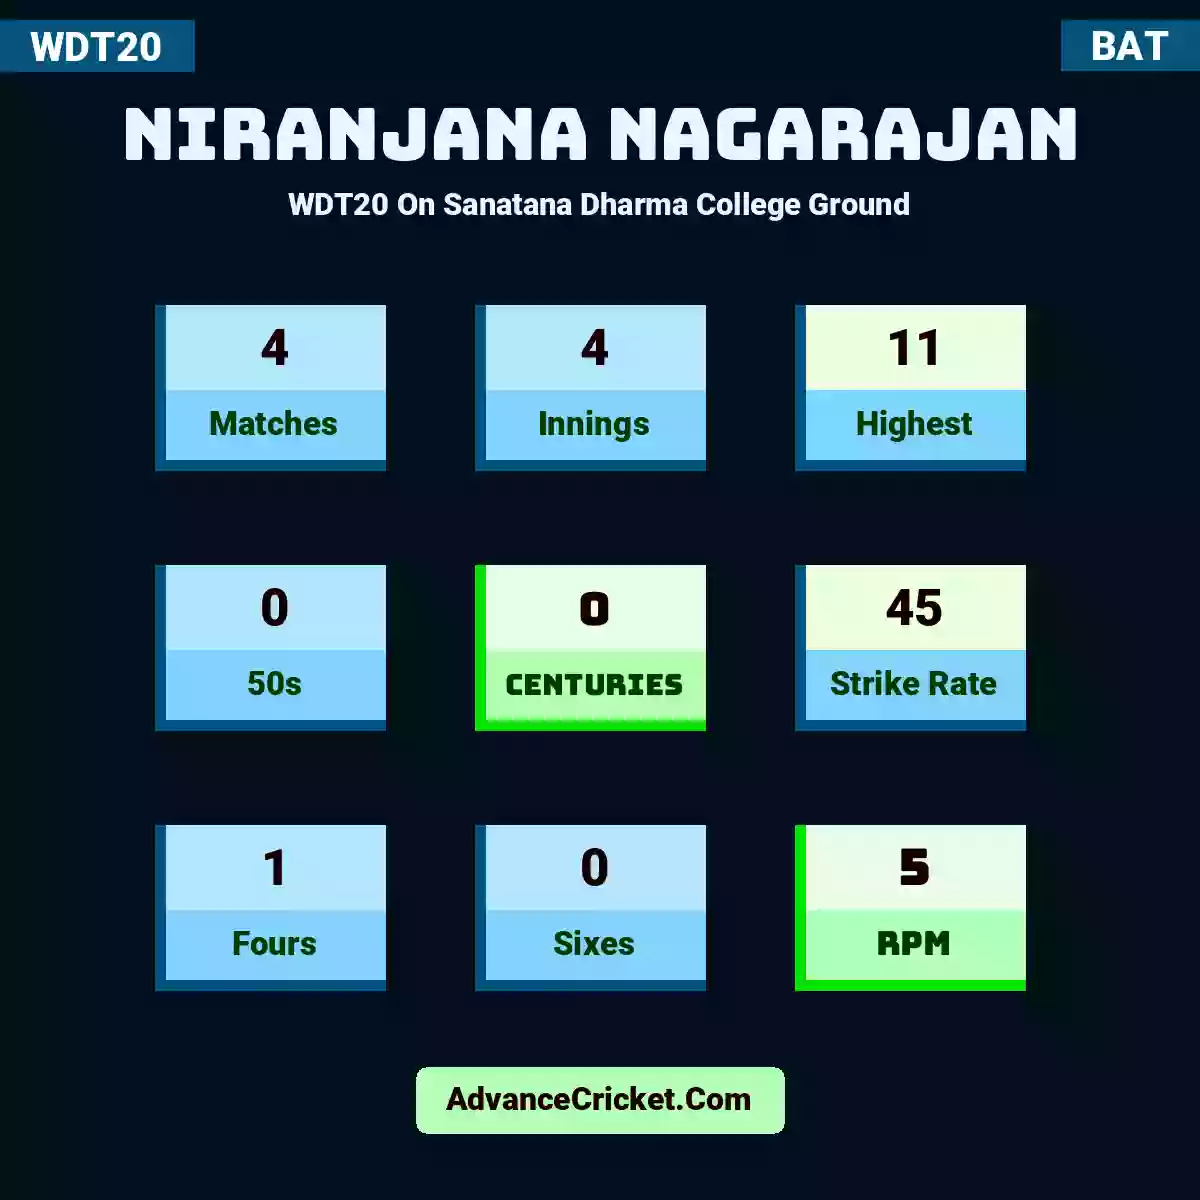 Niranjana Nagarajan WDT20  On Sanatana Dharma College Ground, Niranjana Nagarajan played 4 matches, scored 11 runs as highest, 0 half-centuries, and 0 centuries, with a strike rate of 45. N.Nagarajan hit 1 fours and 0 sixes, with an RPM of 5.